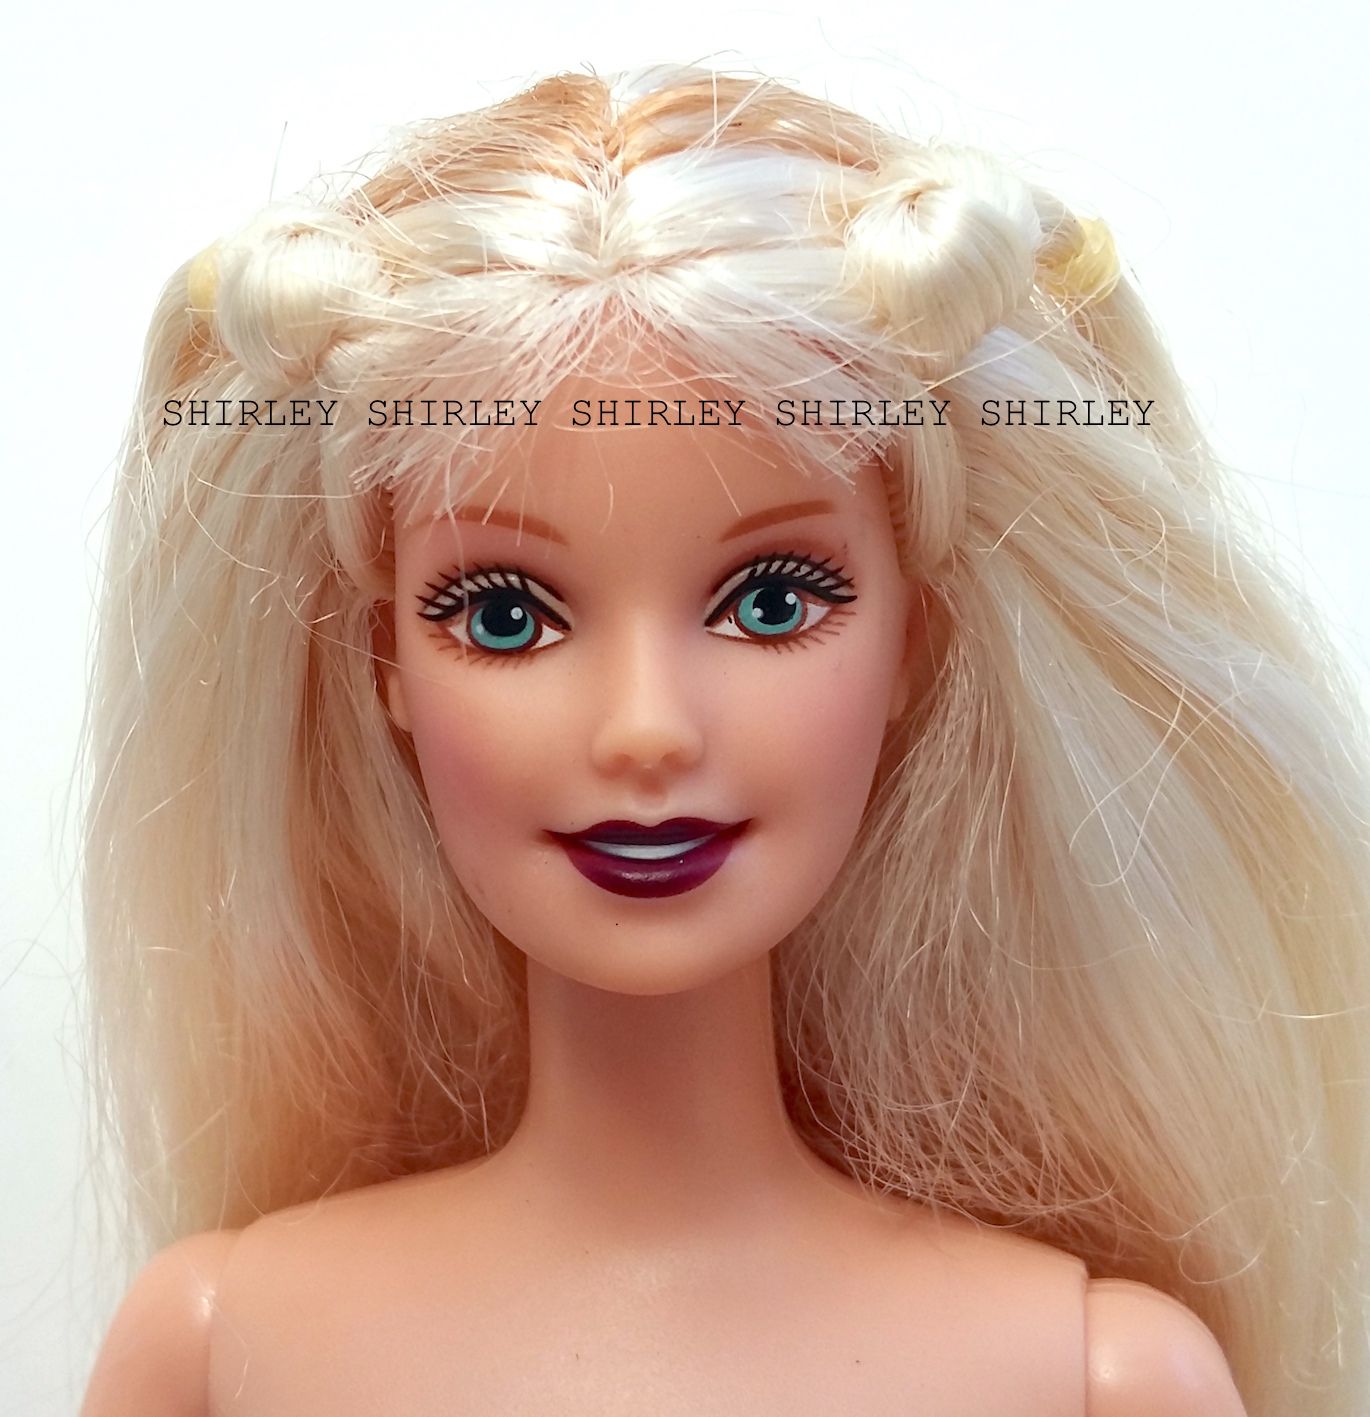 1999 BARBIE DOLLS - Barbie doll identification